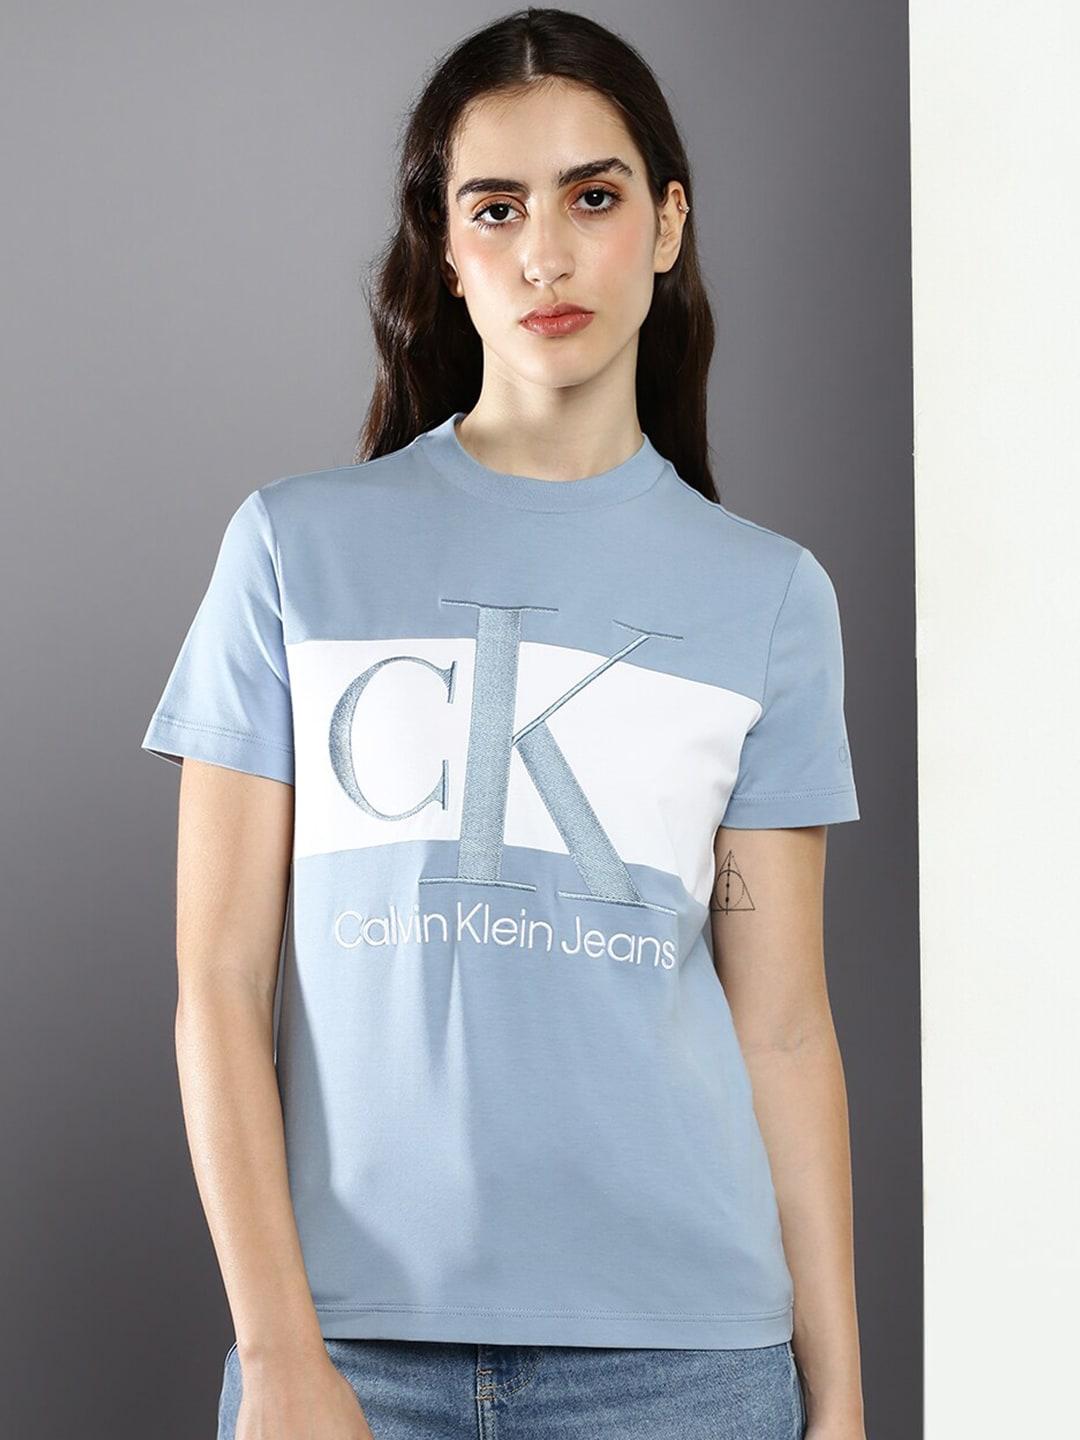 calvin klein jeans women round neck typography printed t-shirt